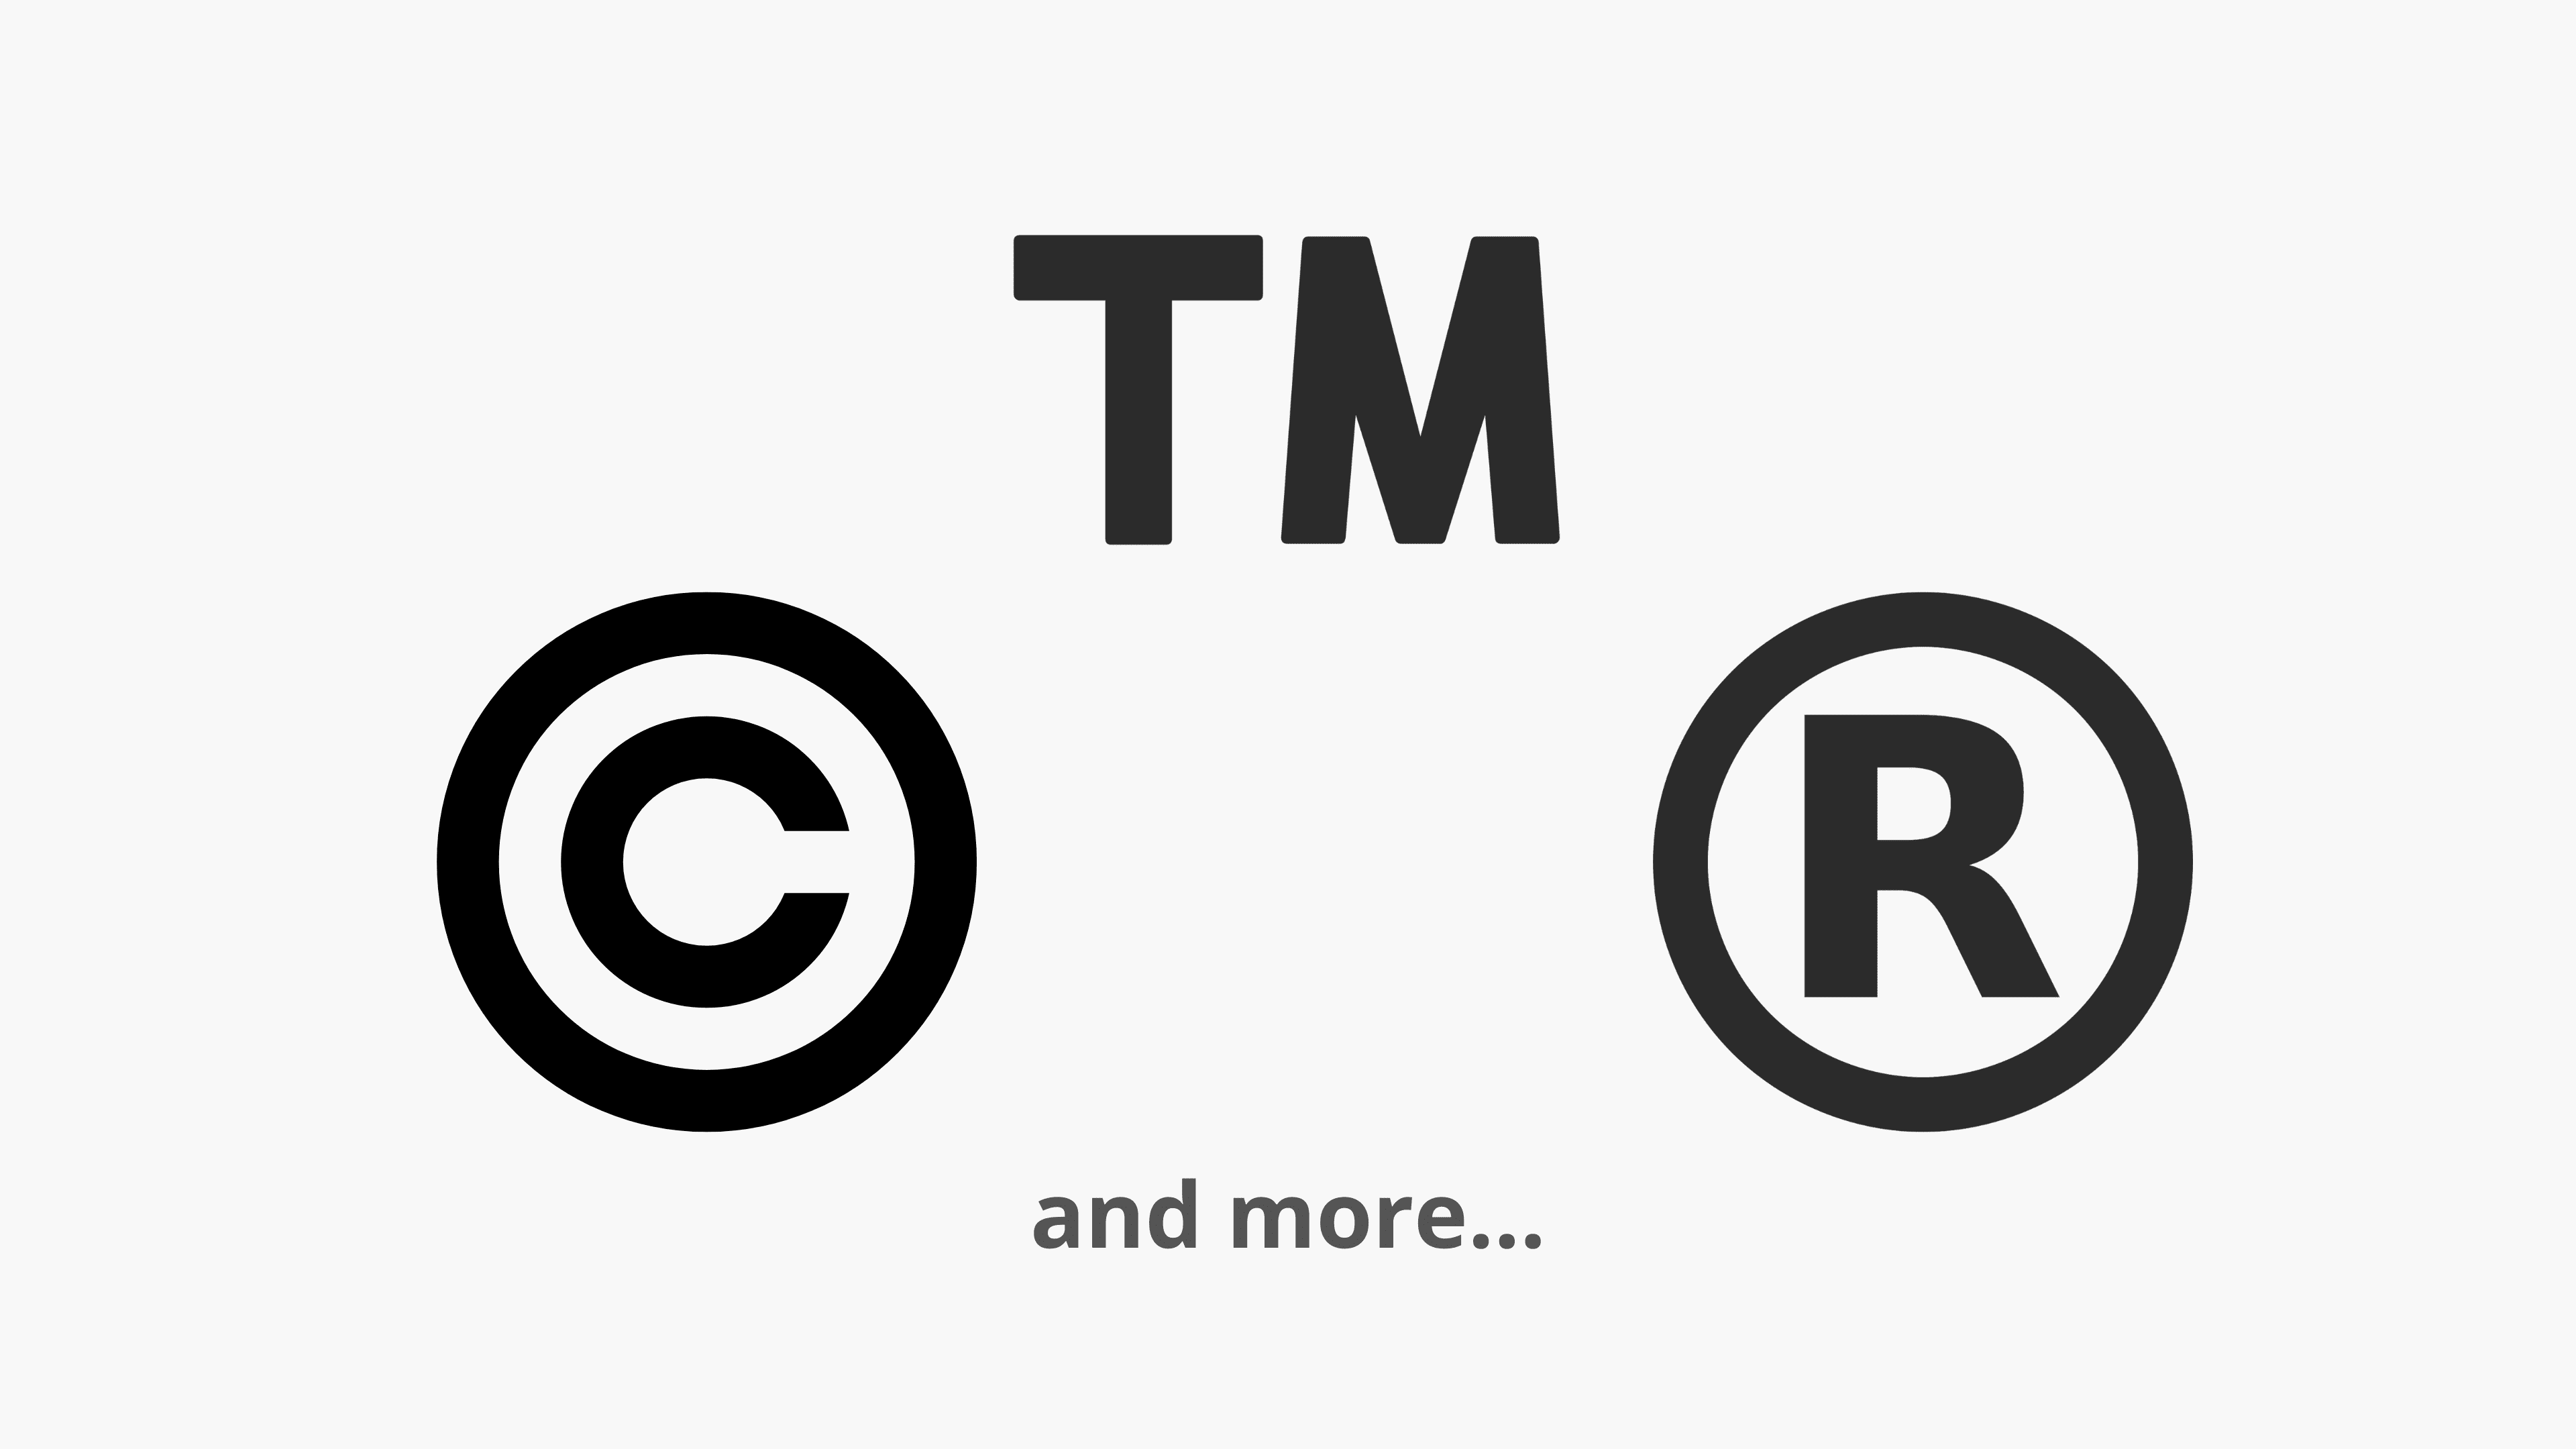 Copyright, trademark, and registered symbols on a light background